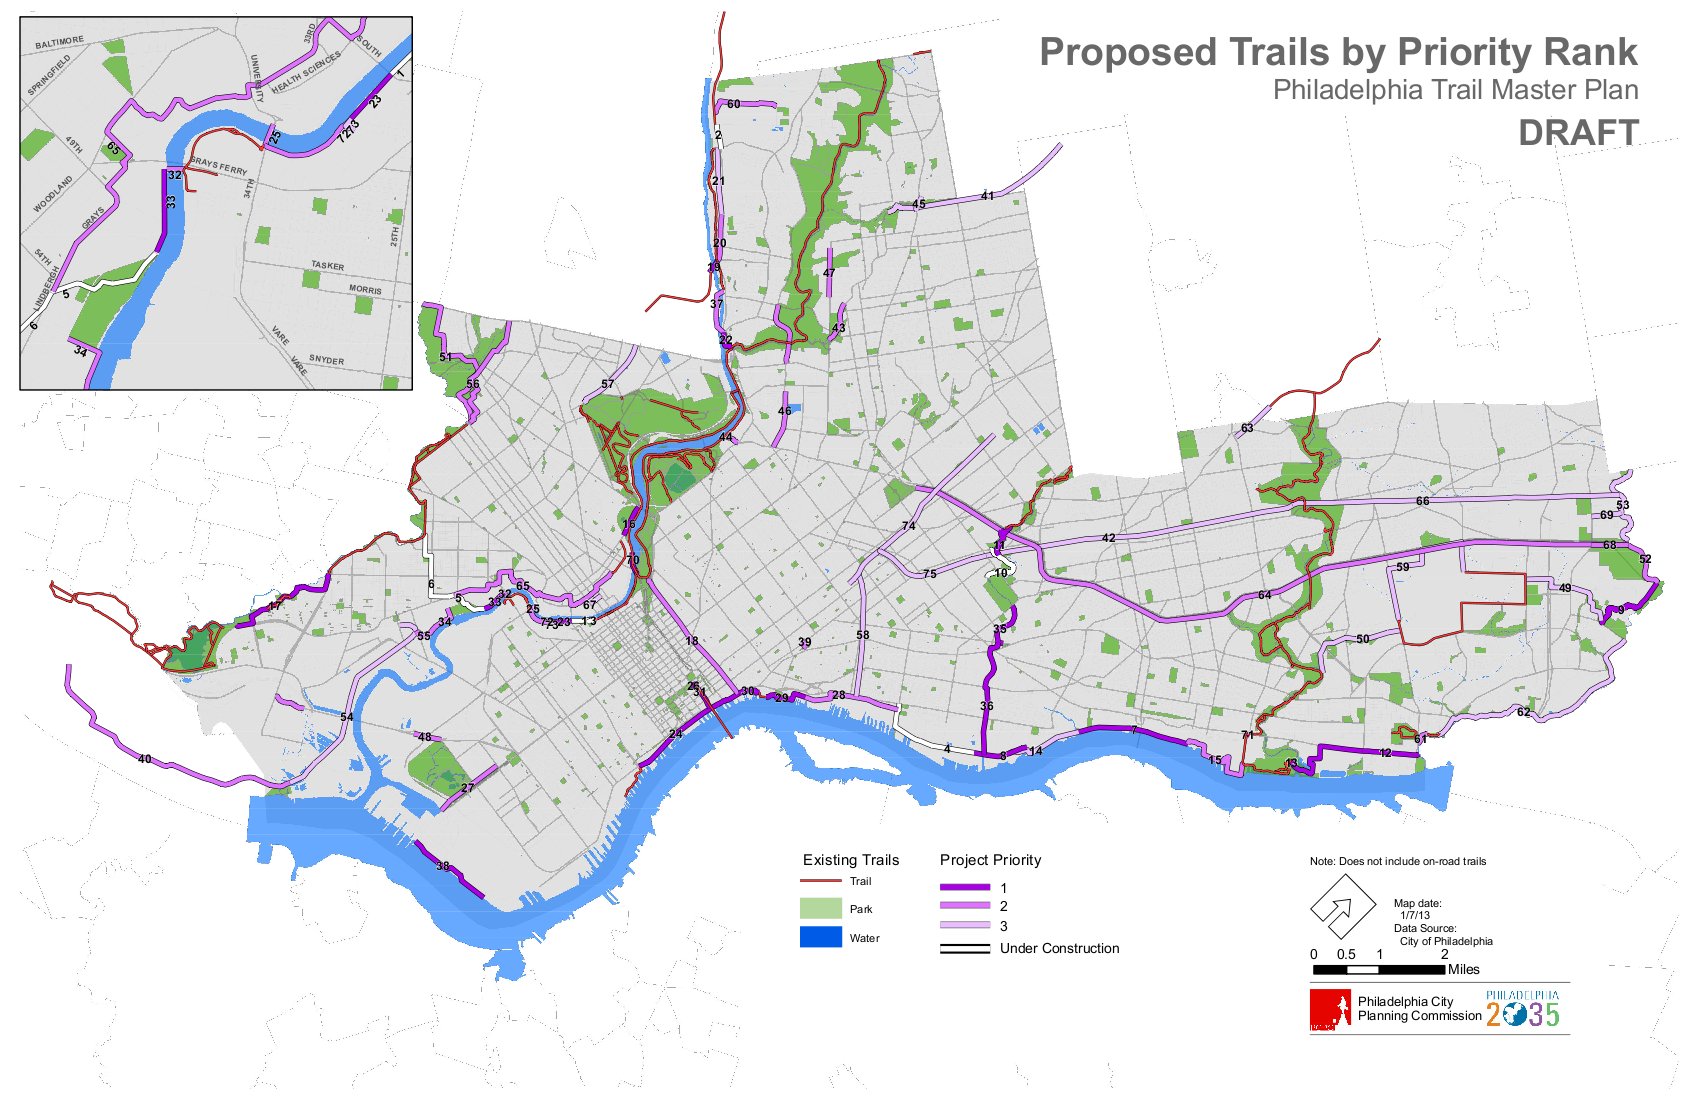 Philadelphia Trail Master Plan Draft Priority Map